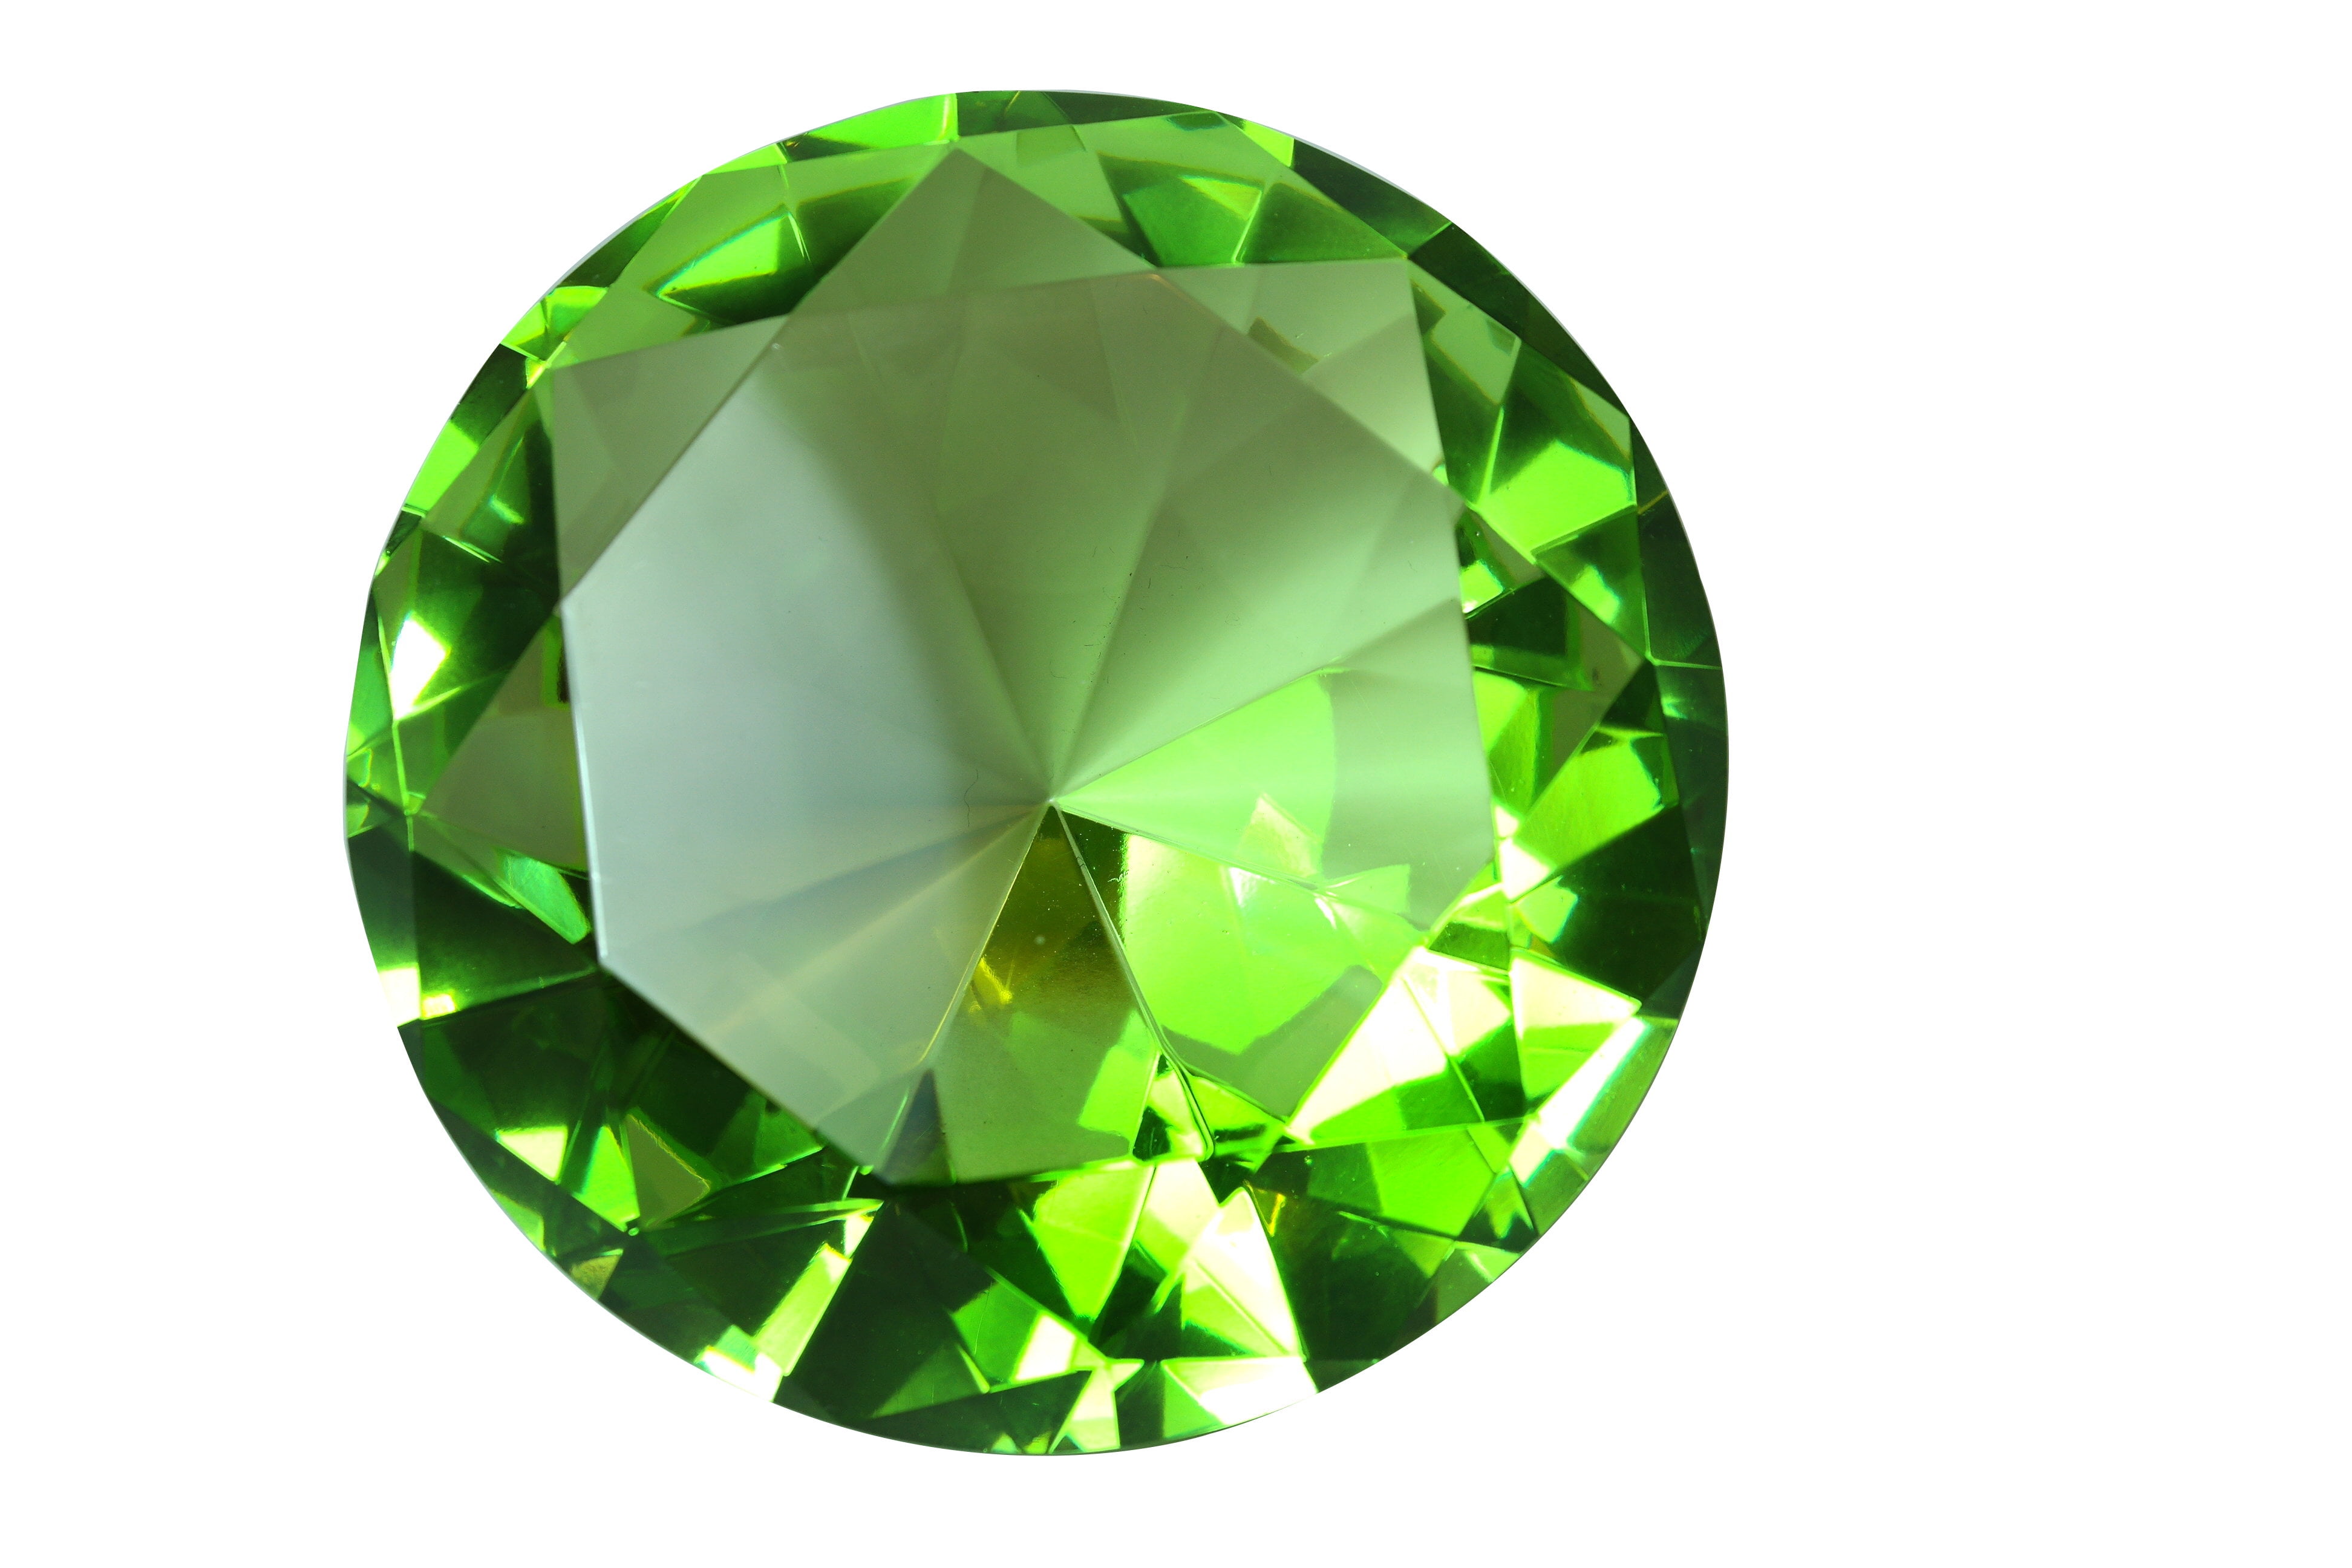 3-3.5mm Green Diamond Crystal, Raw Green Diamond Crystal, Loose Green Diamond  Crystal, Diamond Octahedron Crystal 5 Pcs to 10 Pcs PPD332 